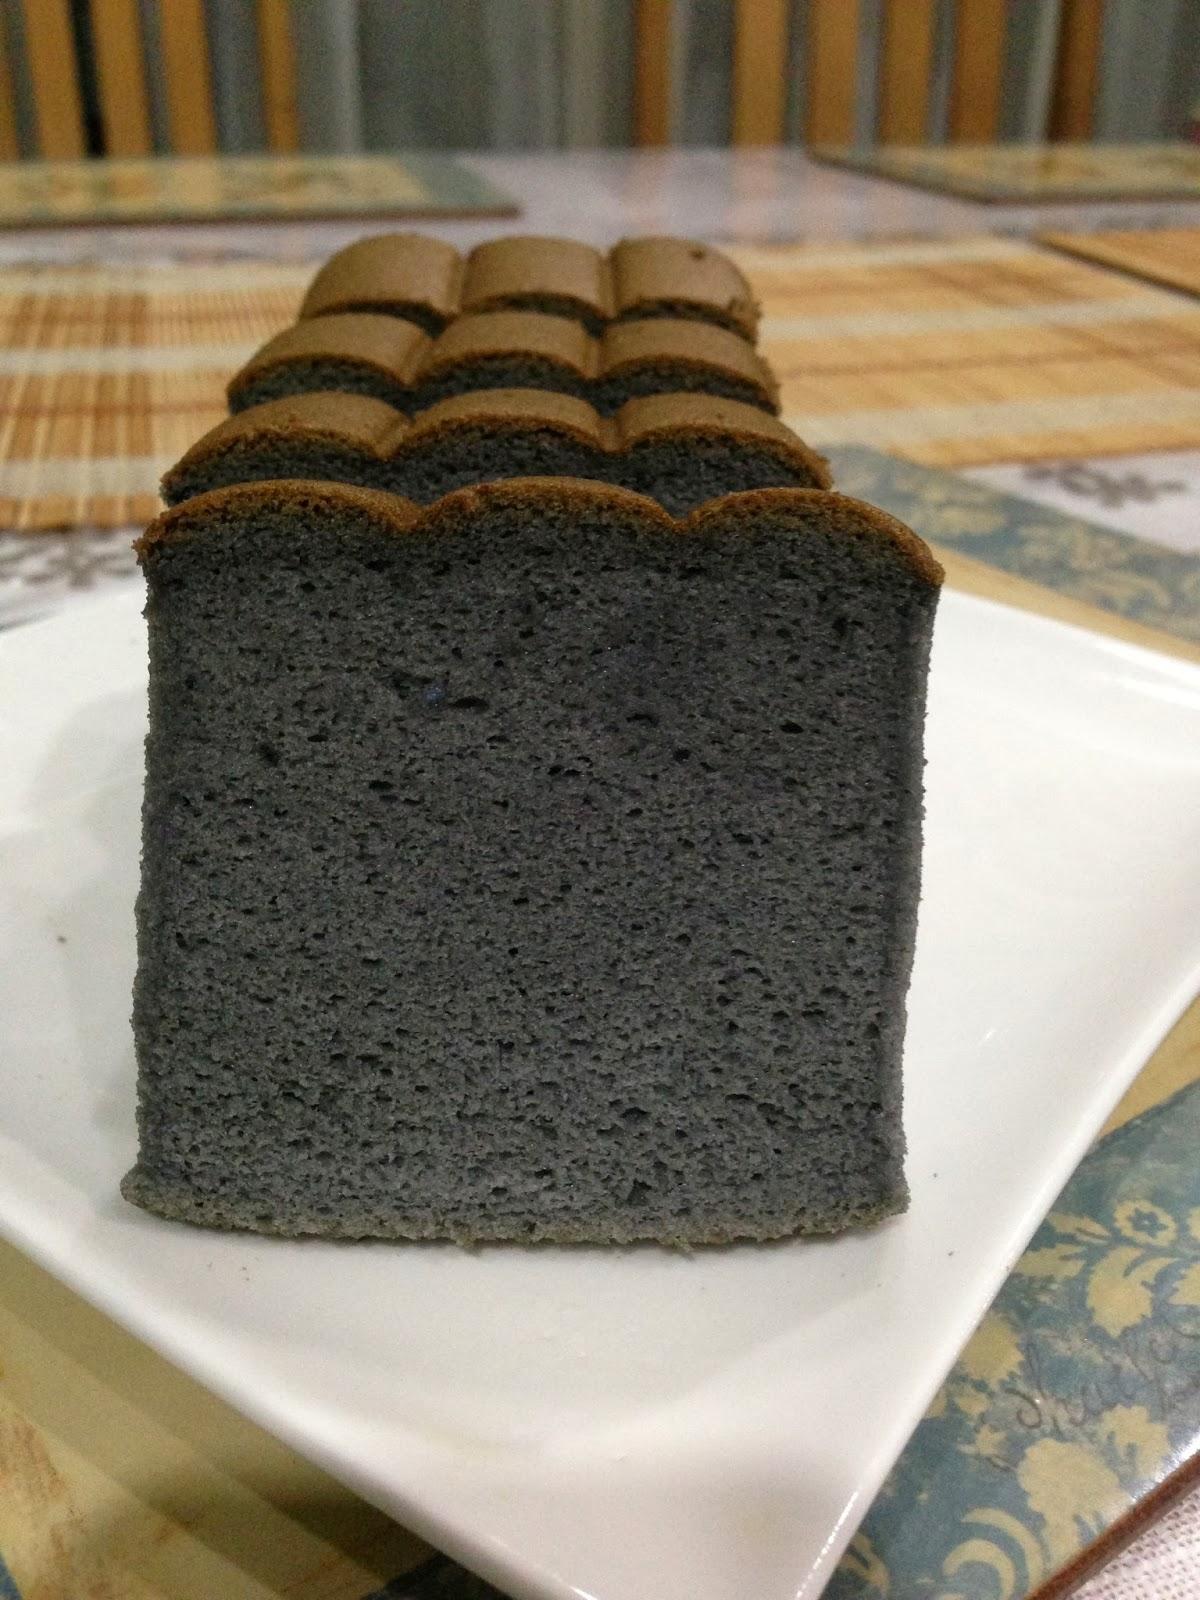 Ogura cake